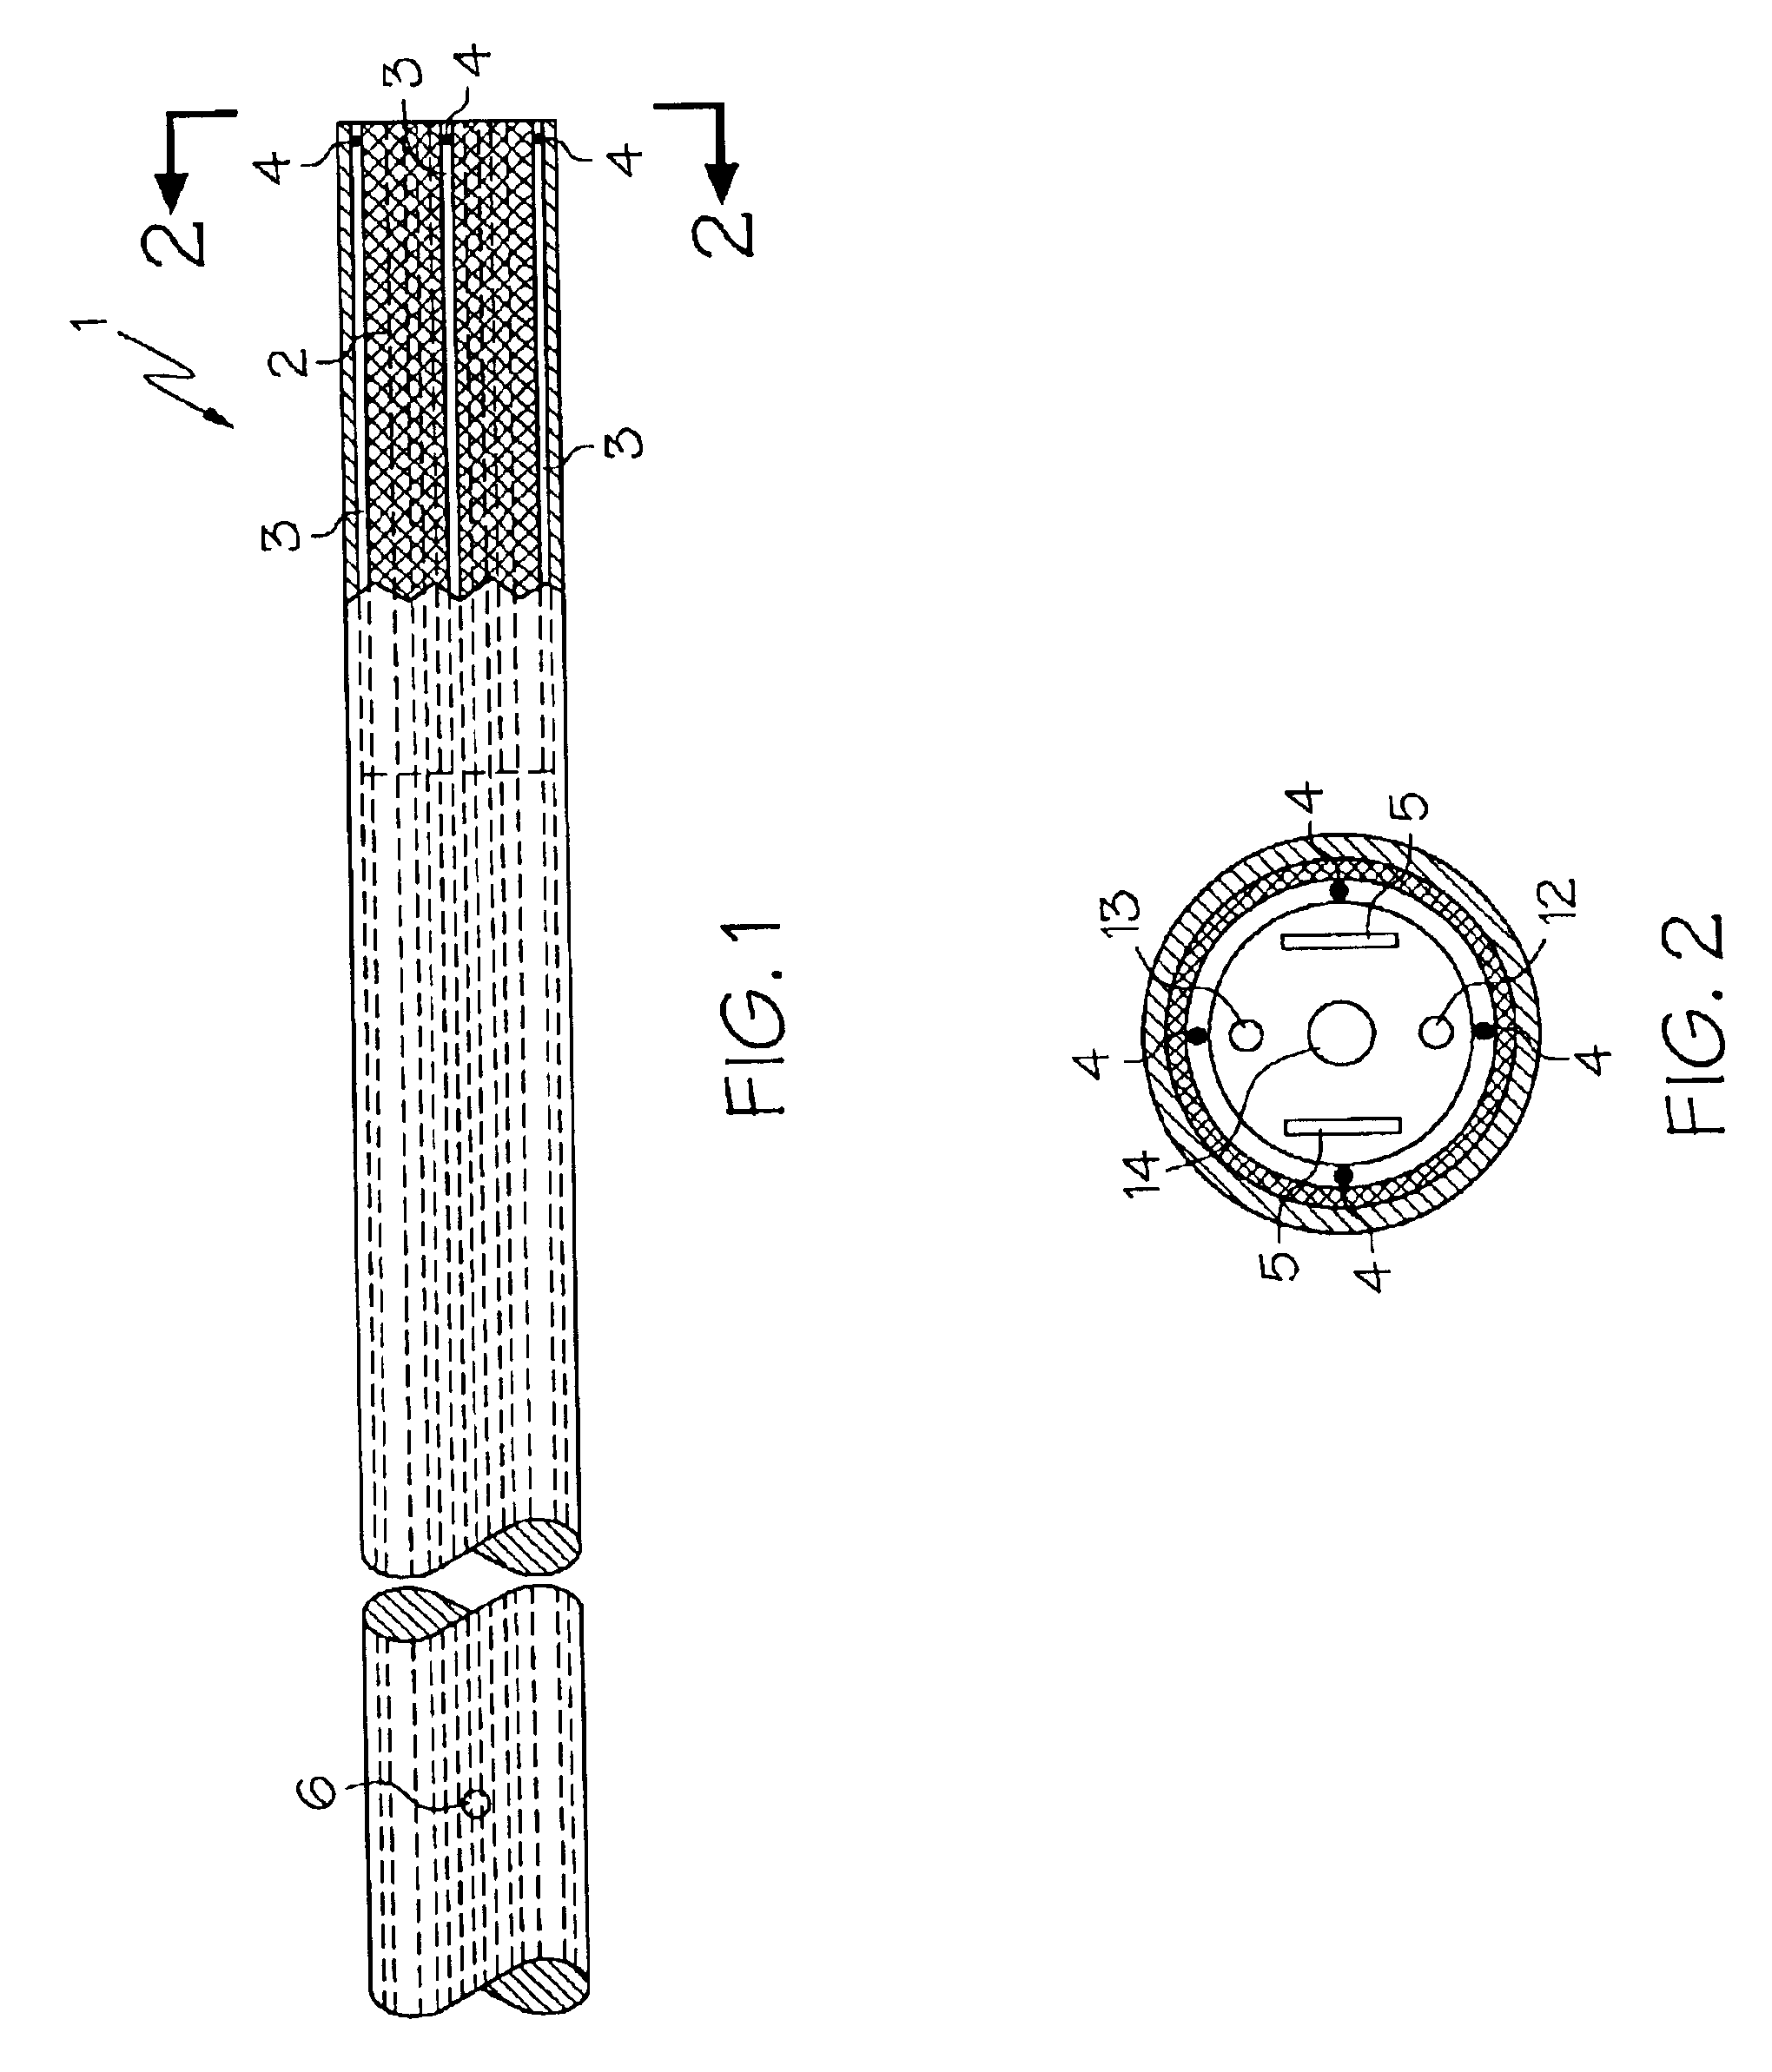 Colonoscope apparatus and method